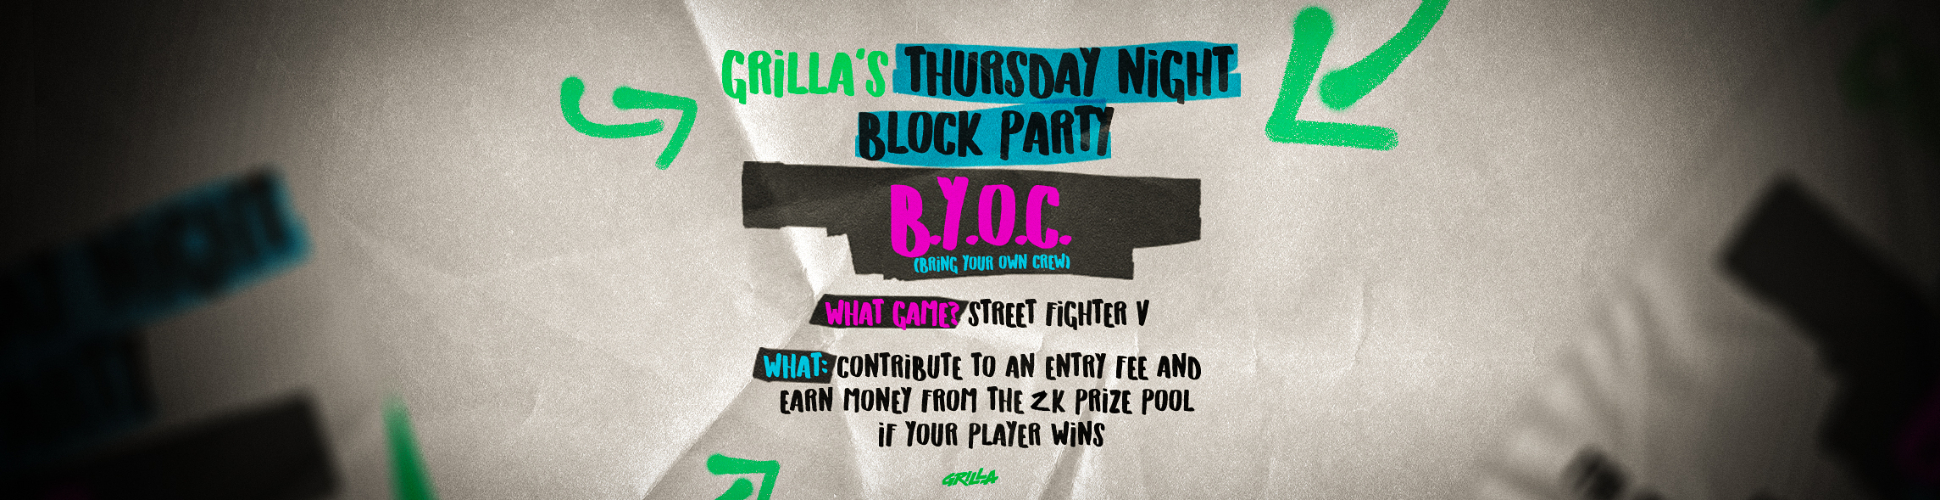 Thursday Night Block Party